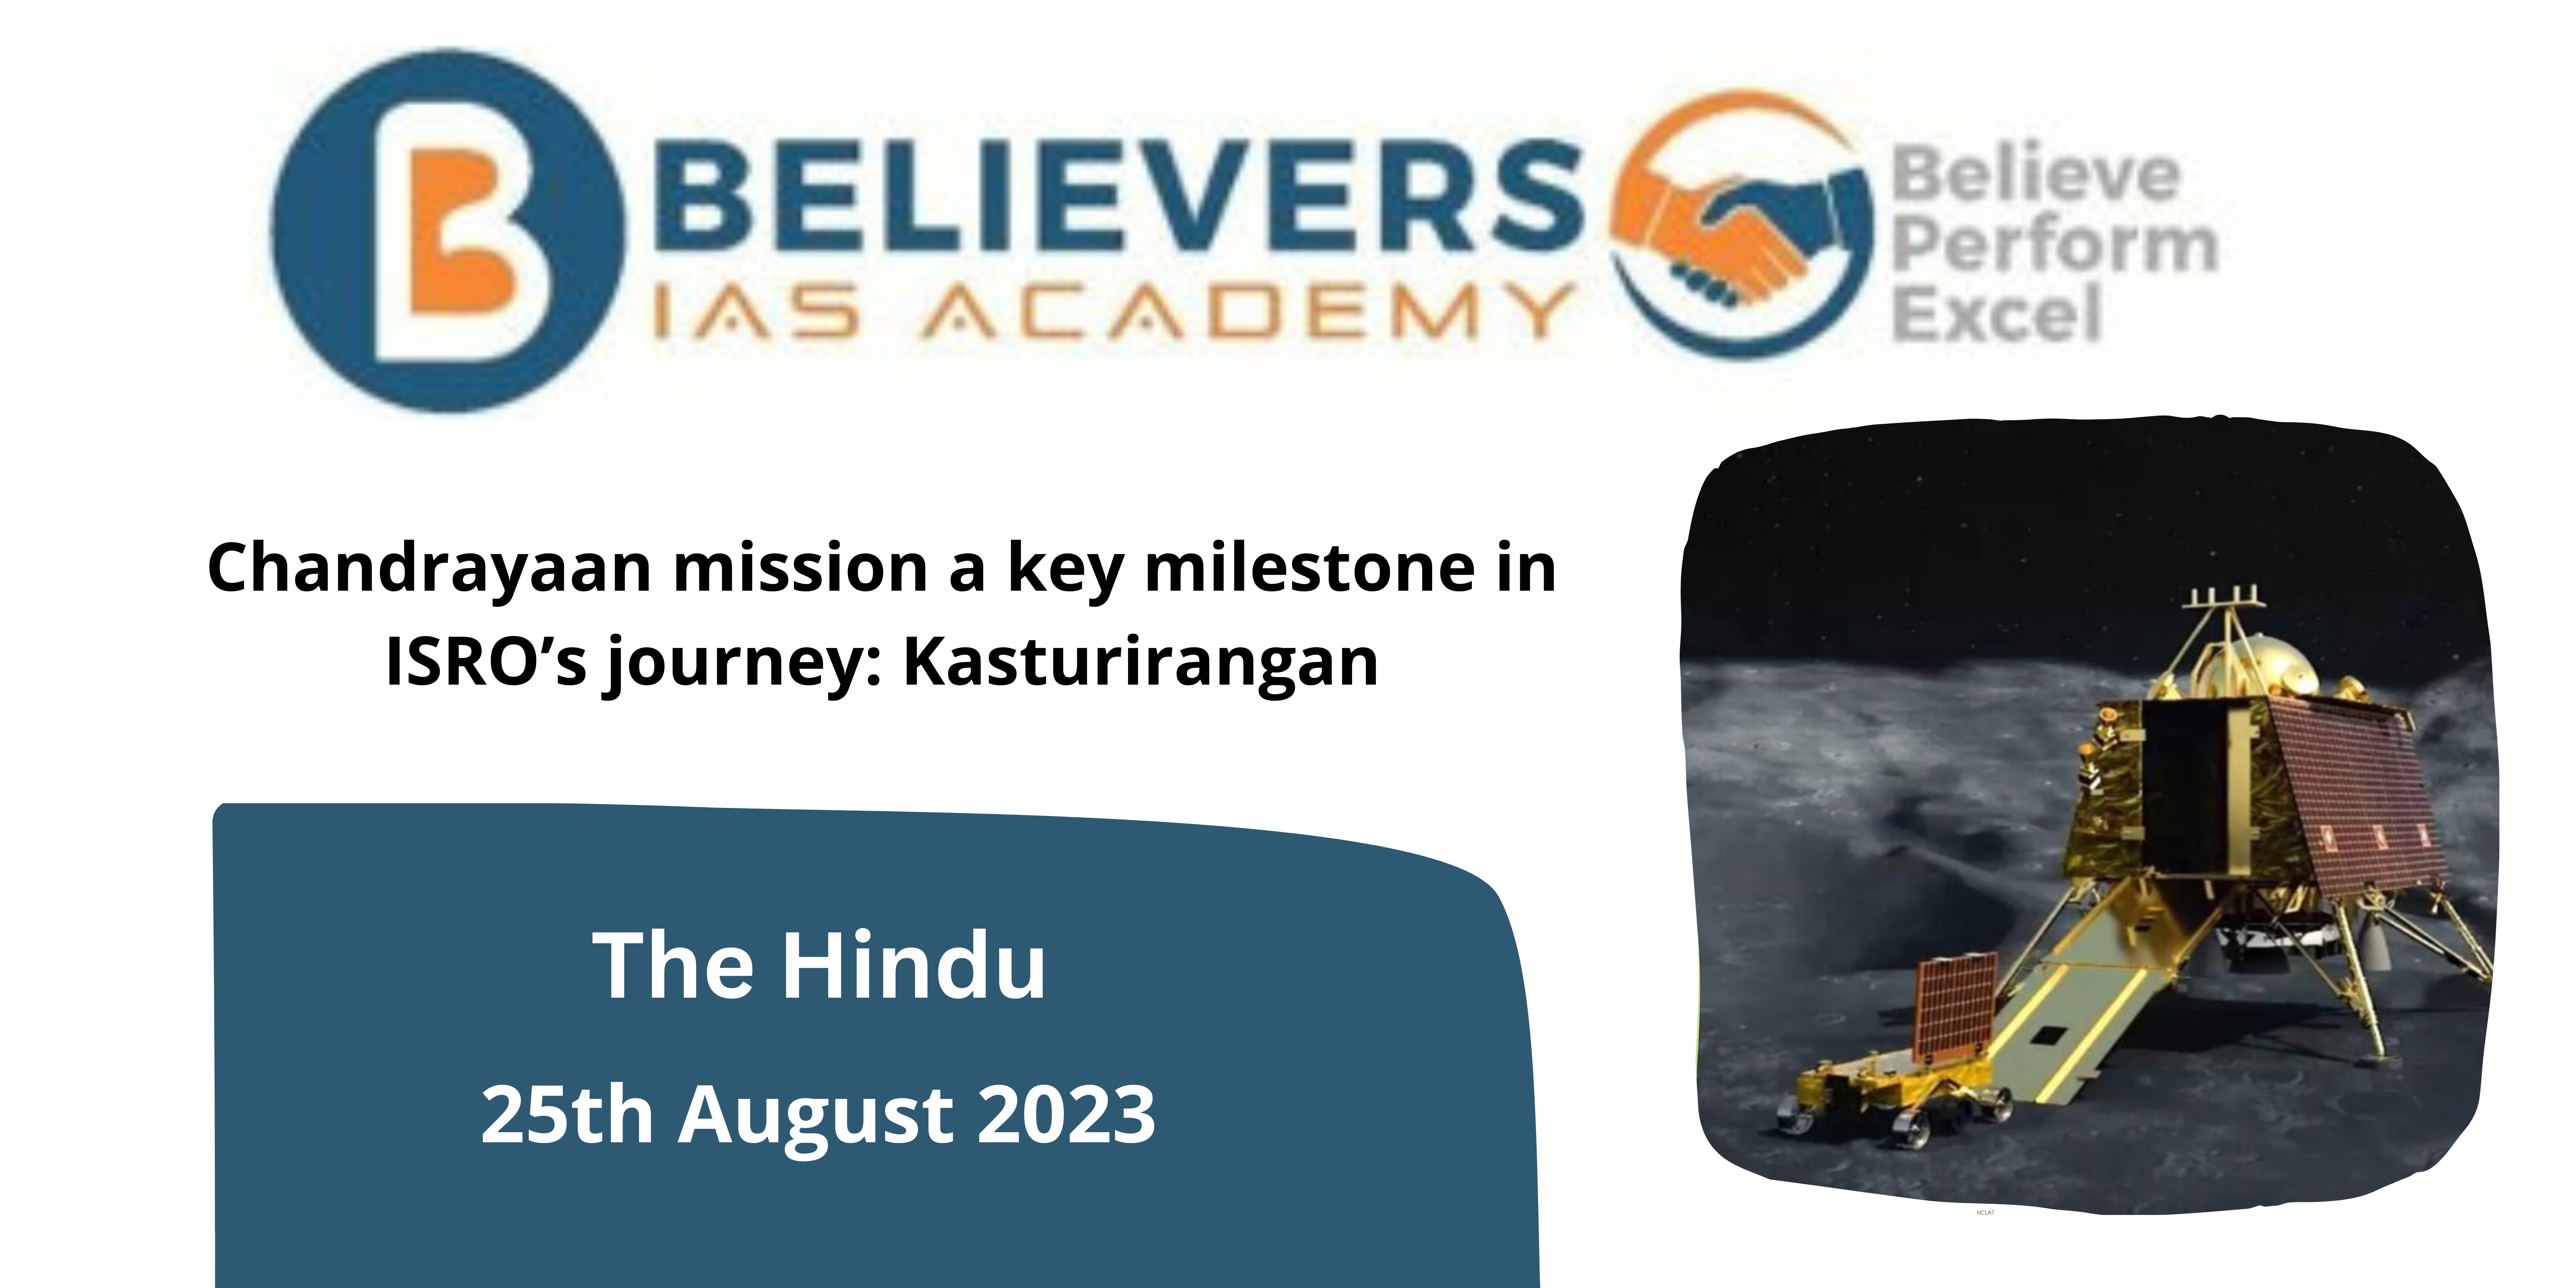 Chandrayaan mission a key milestone in ISRO’s journey: Kasturirangan